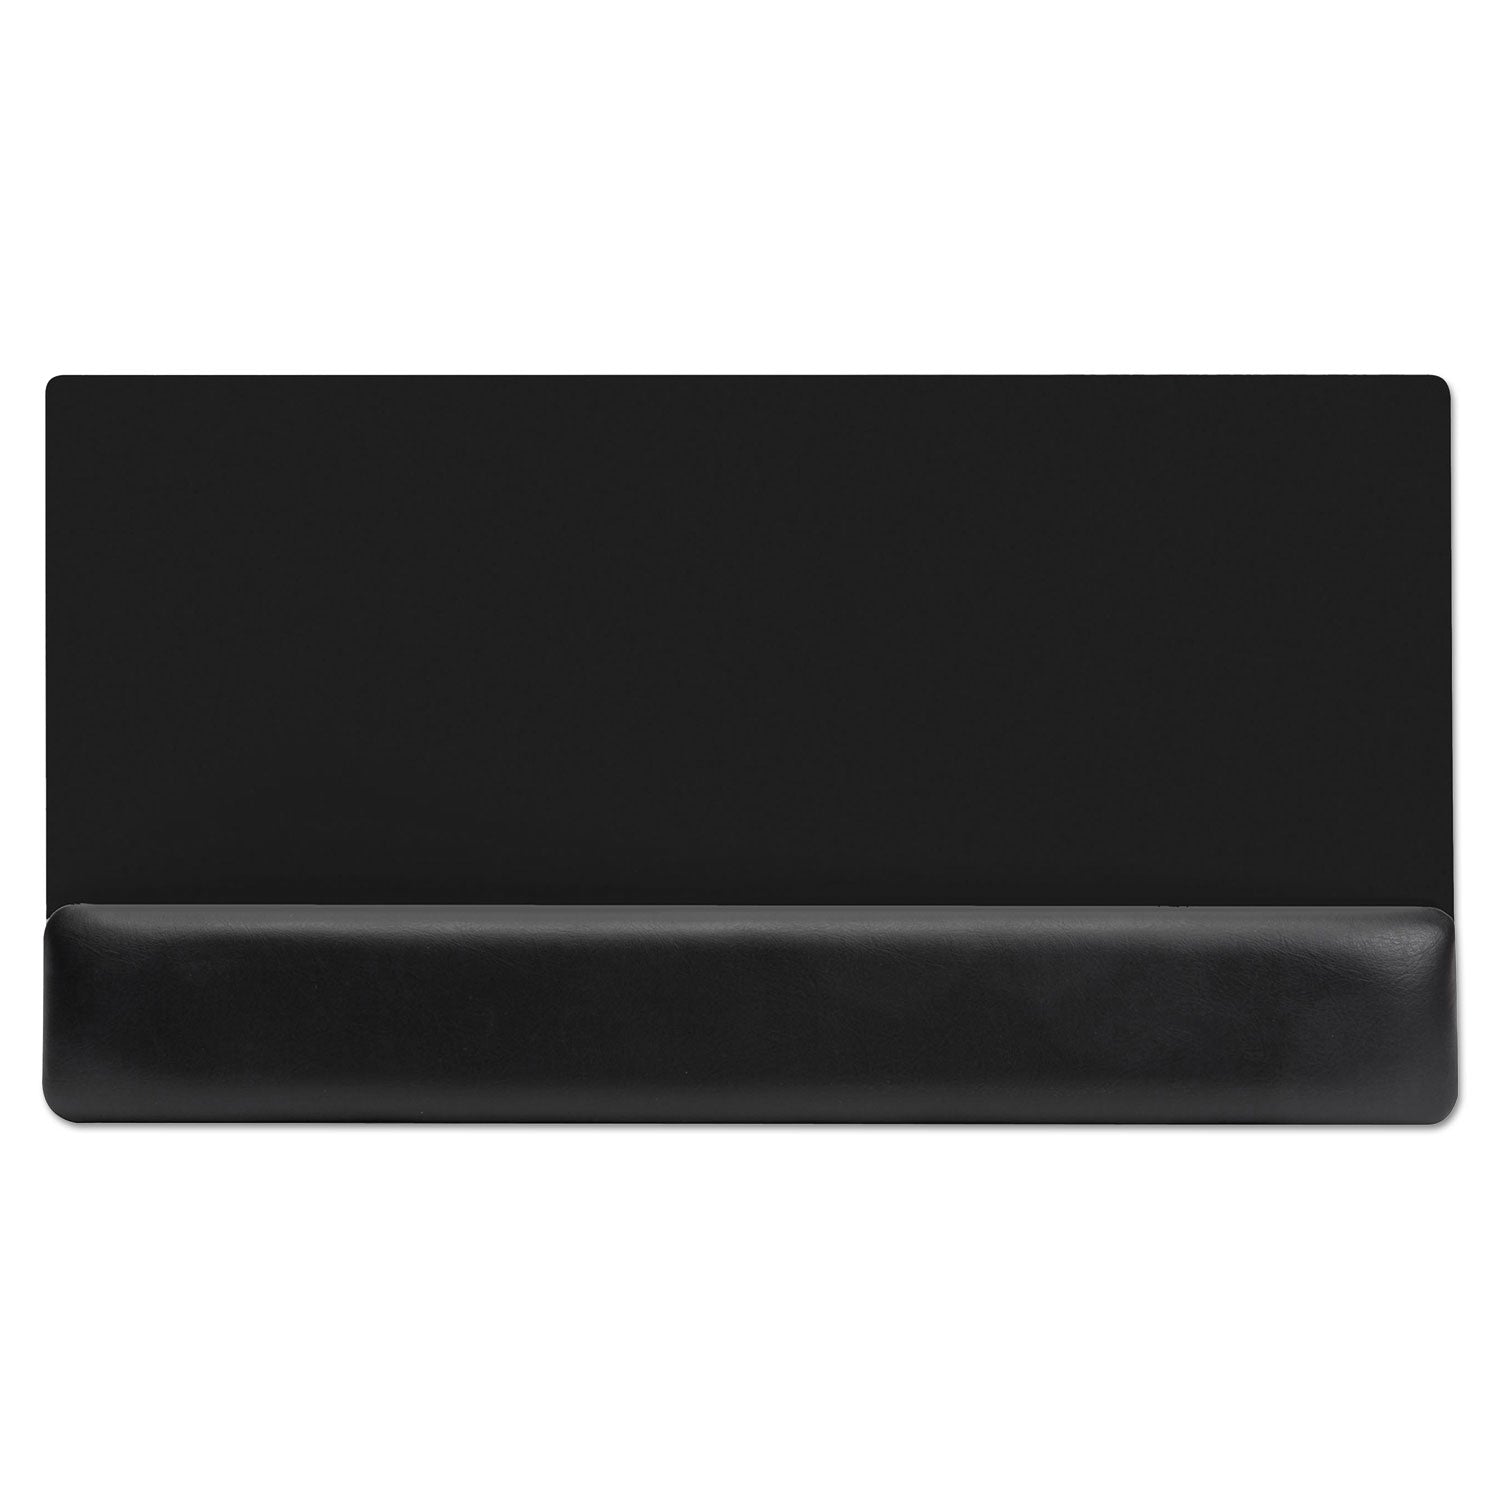 Soft Backed Keyboard Wrist Rest, 19 x 10, Black - 